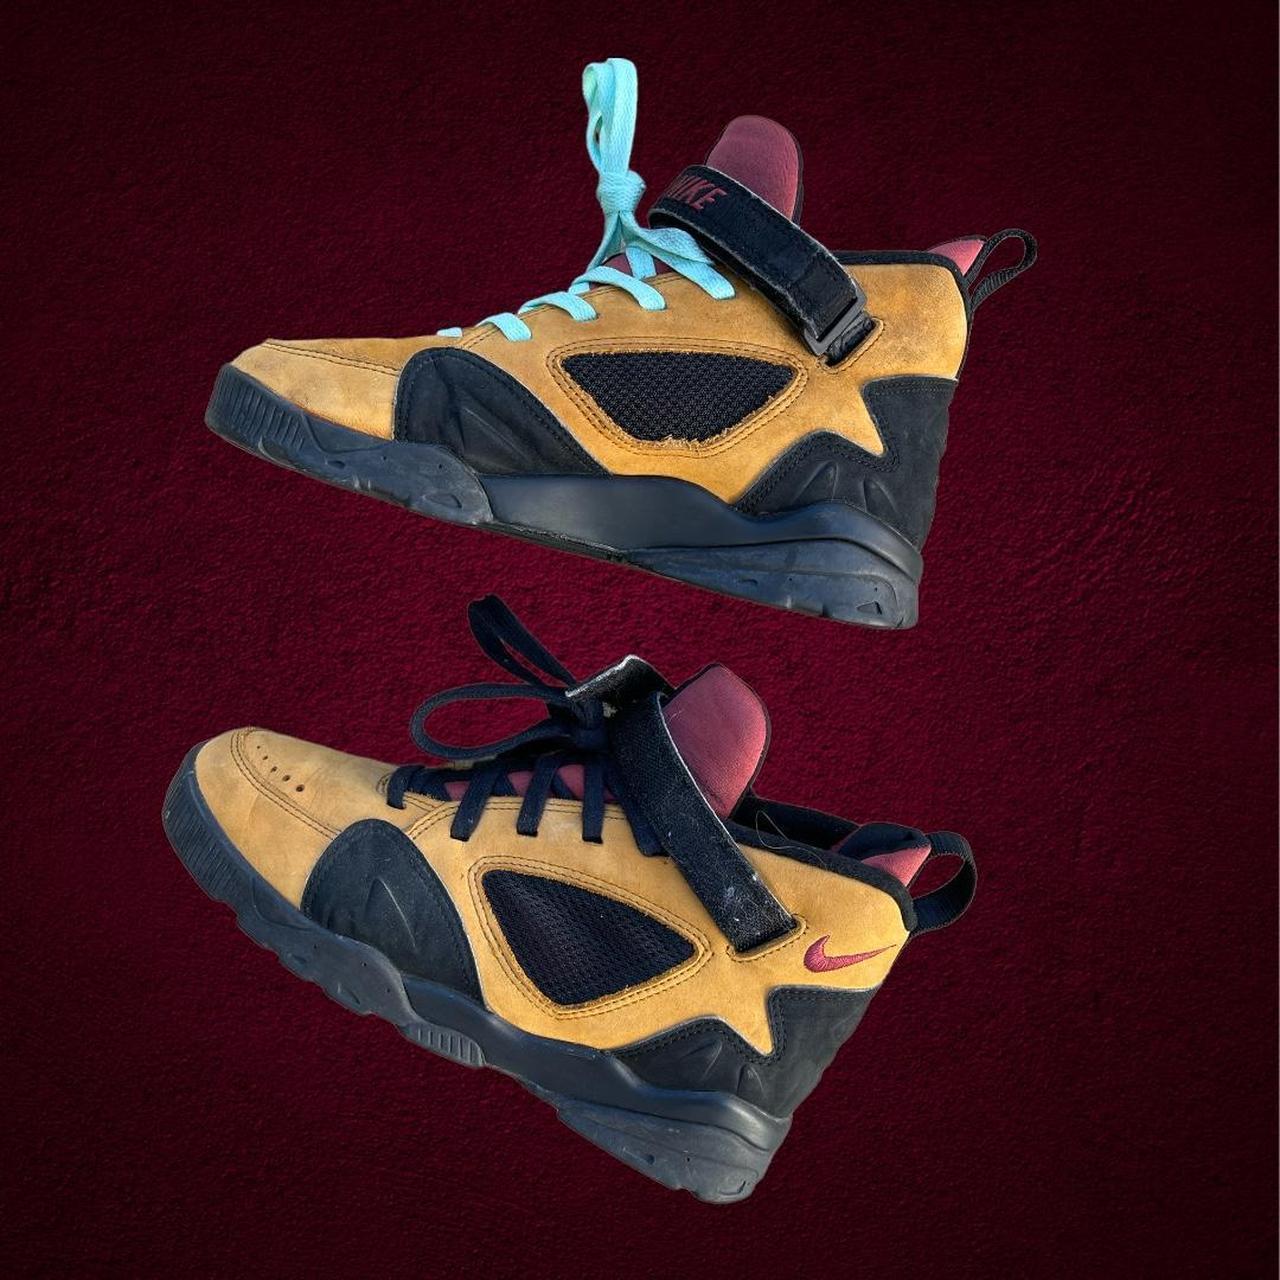 Vintage 1992 Nike Air raid basketball shoes. These - Depop